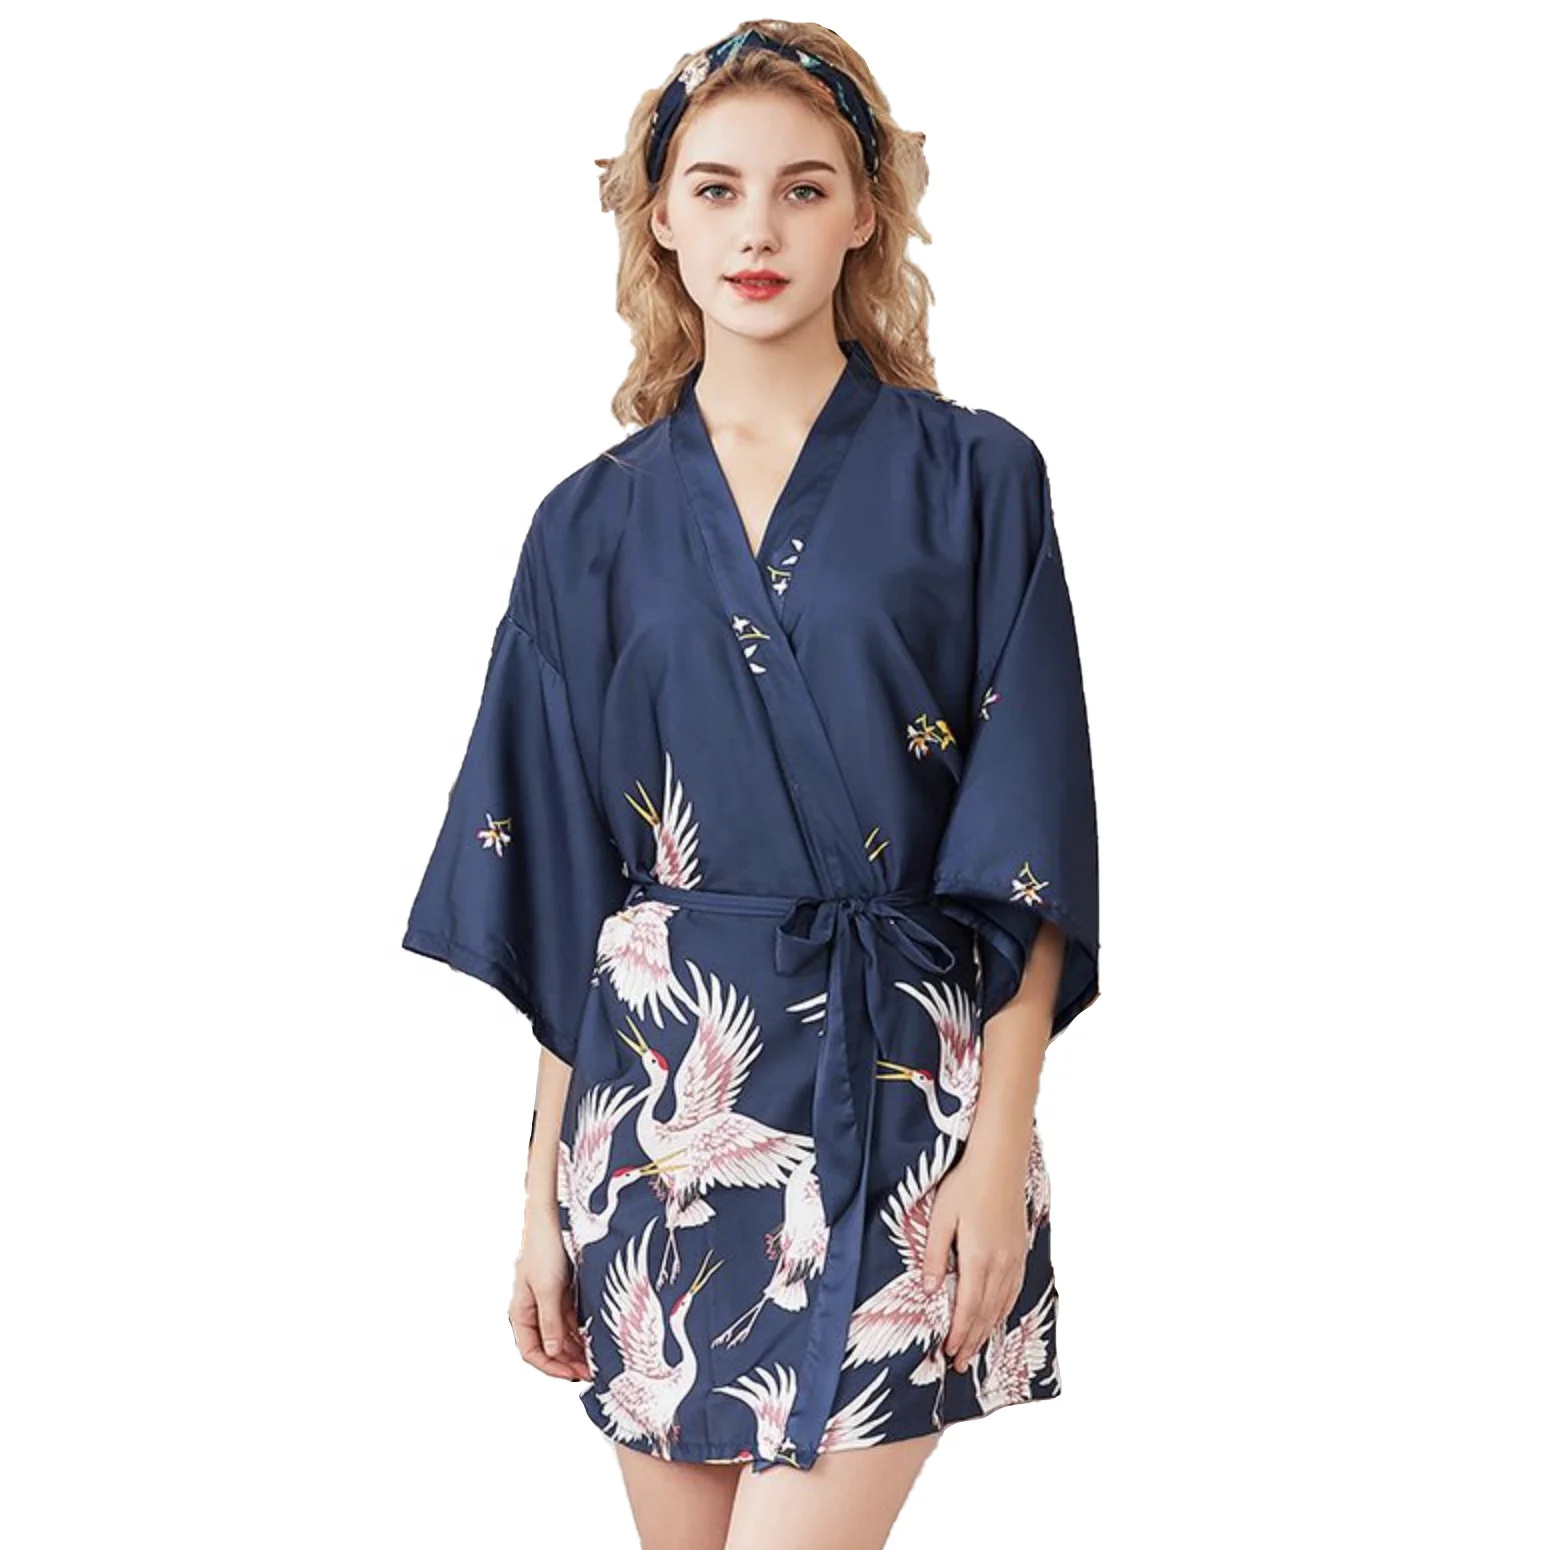 

2021 Hot Sell Sexy Short Wedding Romper Sleepwear Bridesmaid Kimono Robes Pajamas Crane Printed Silk Satin Robes Women, Camel, coral, dark lotus, grey, navy blue, black, burgundy...